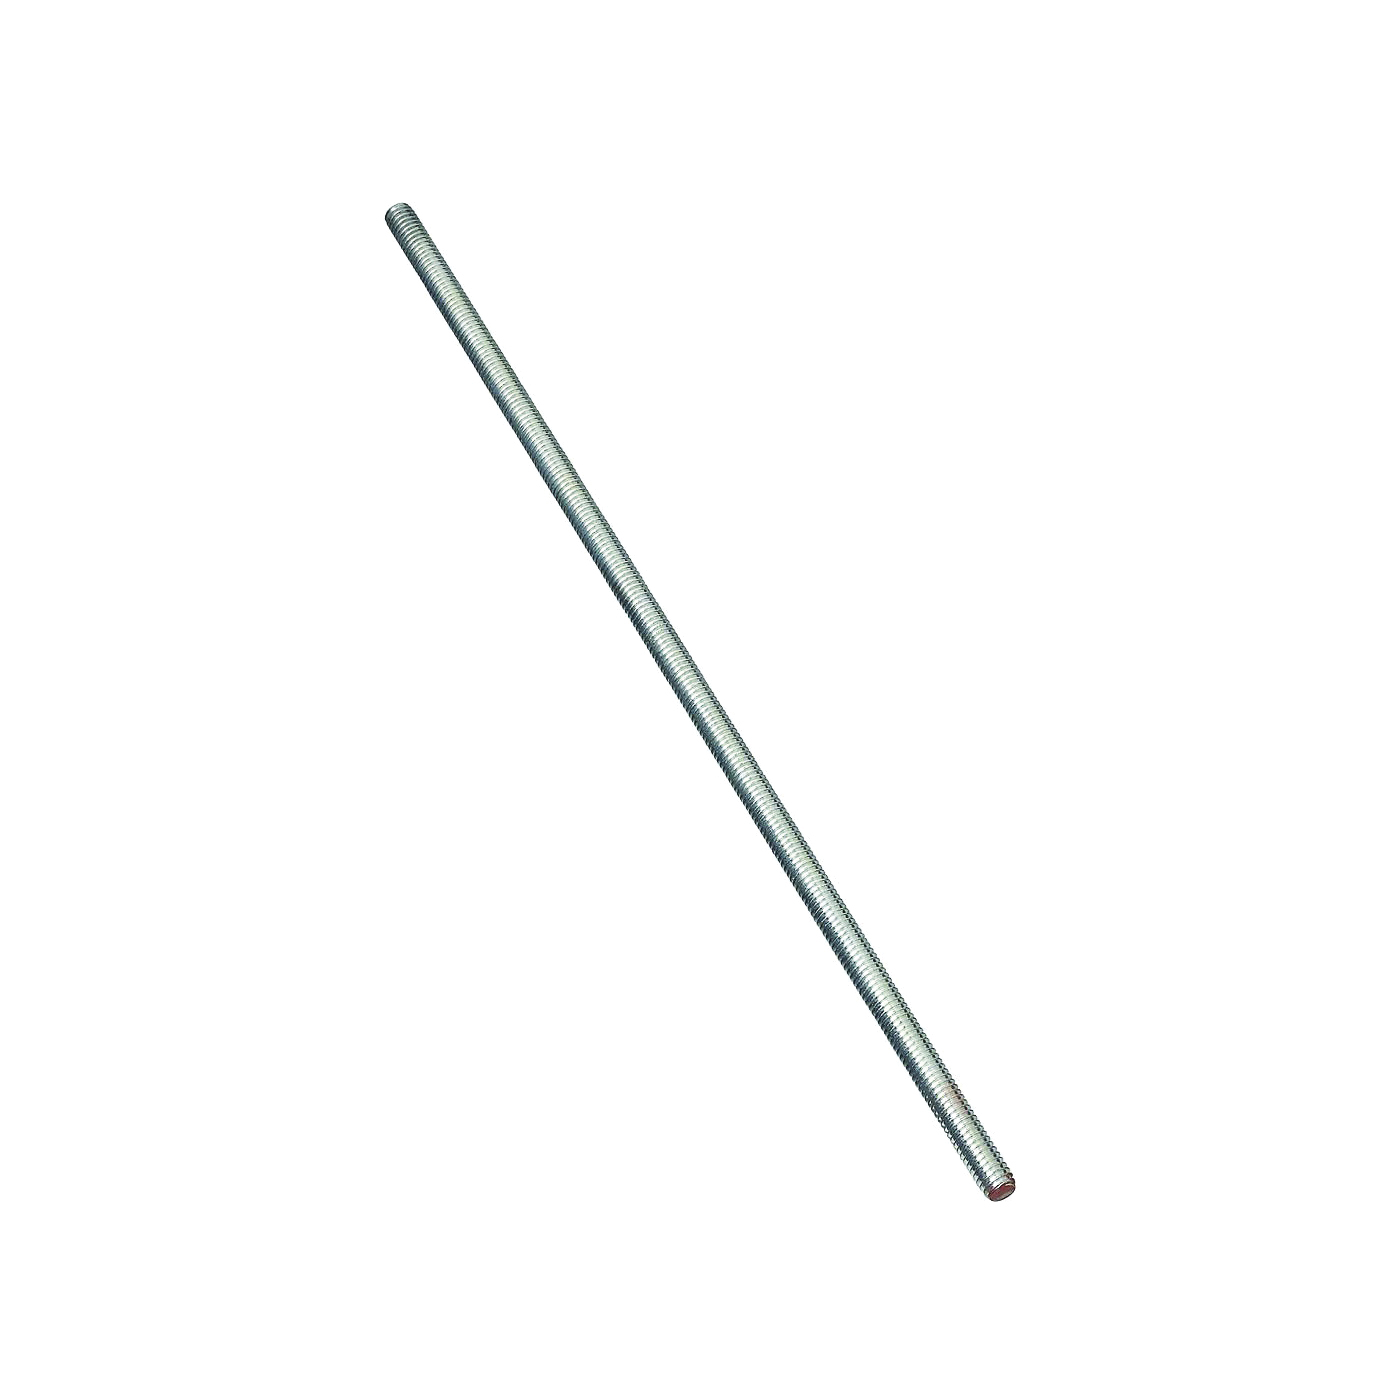 N179-325 Threaded Rod, 5/16-18 Thread, 12 in L, A Grade, Steel, Zinc, UNC Thread